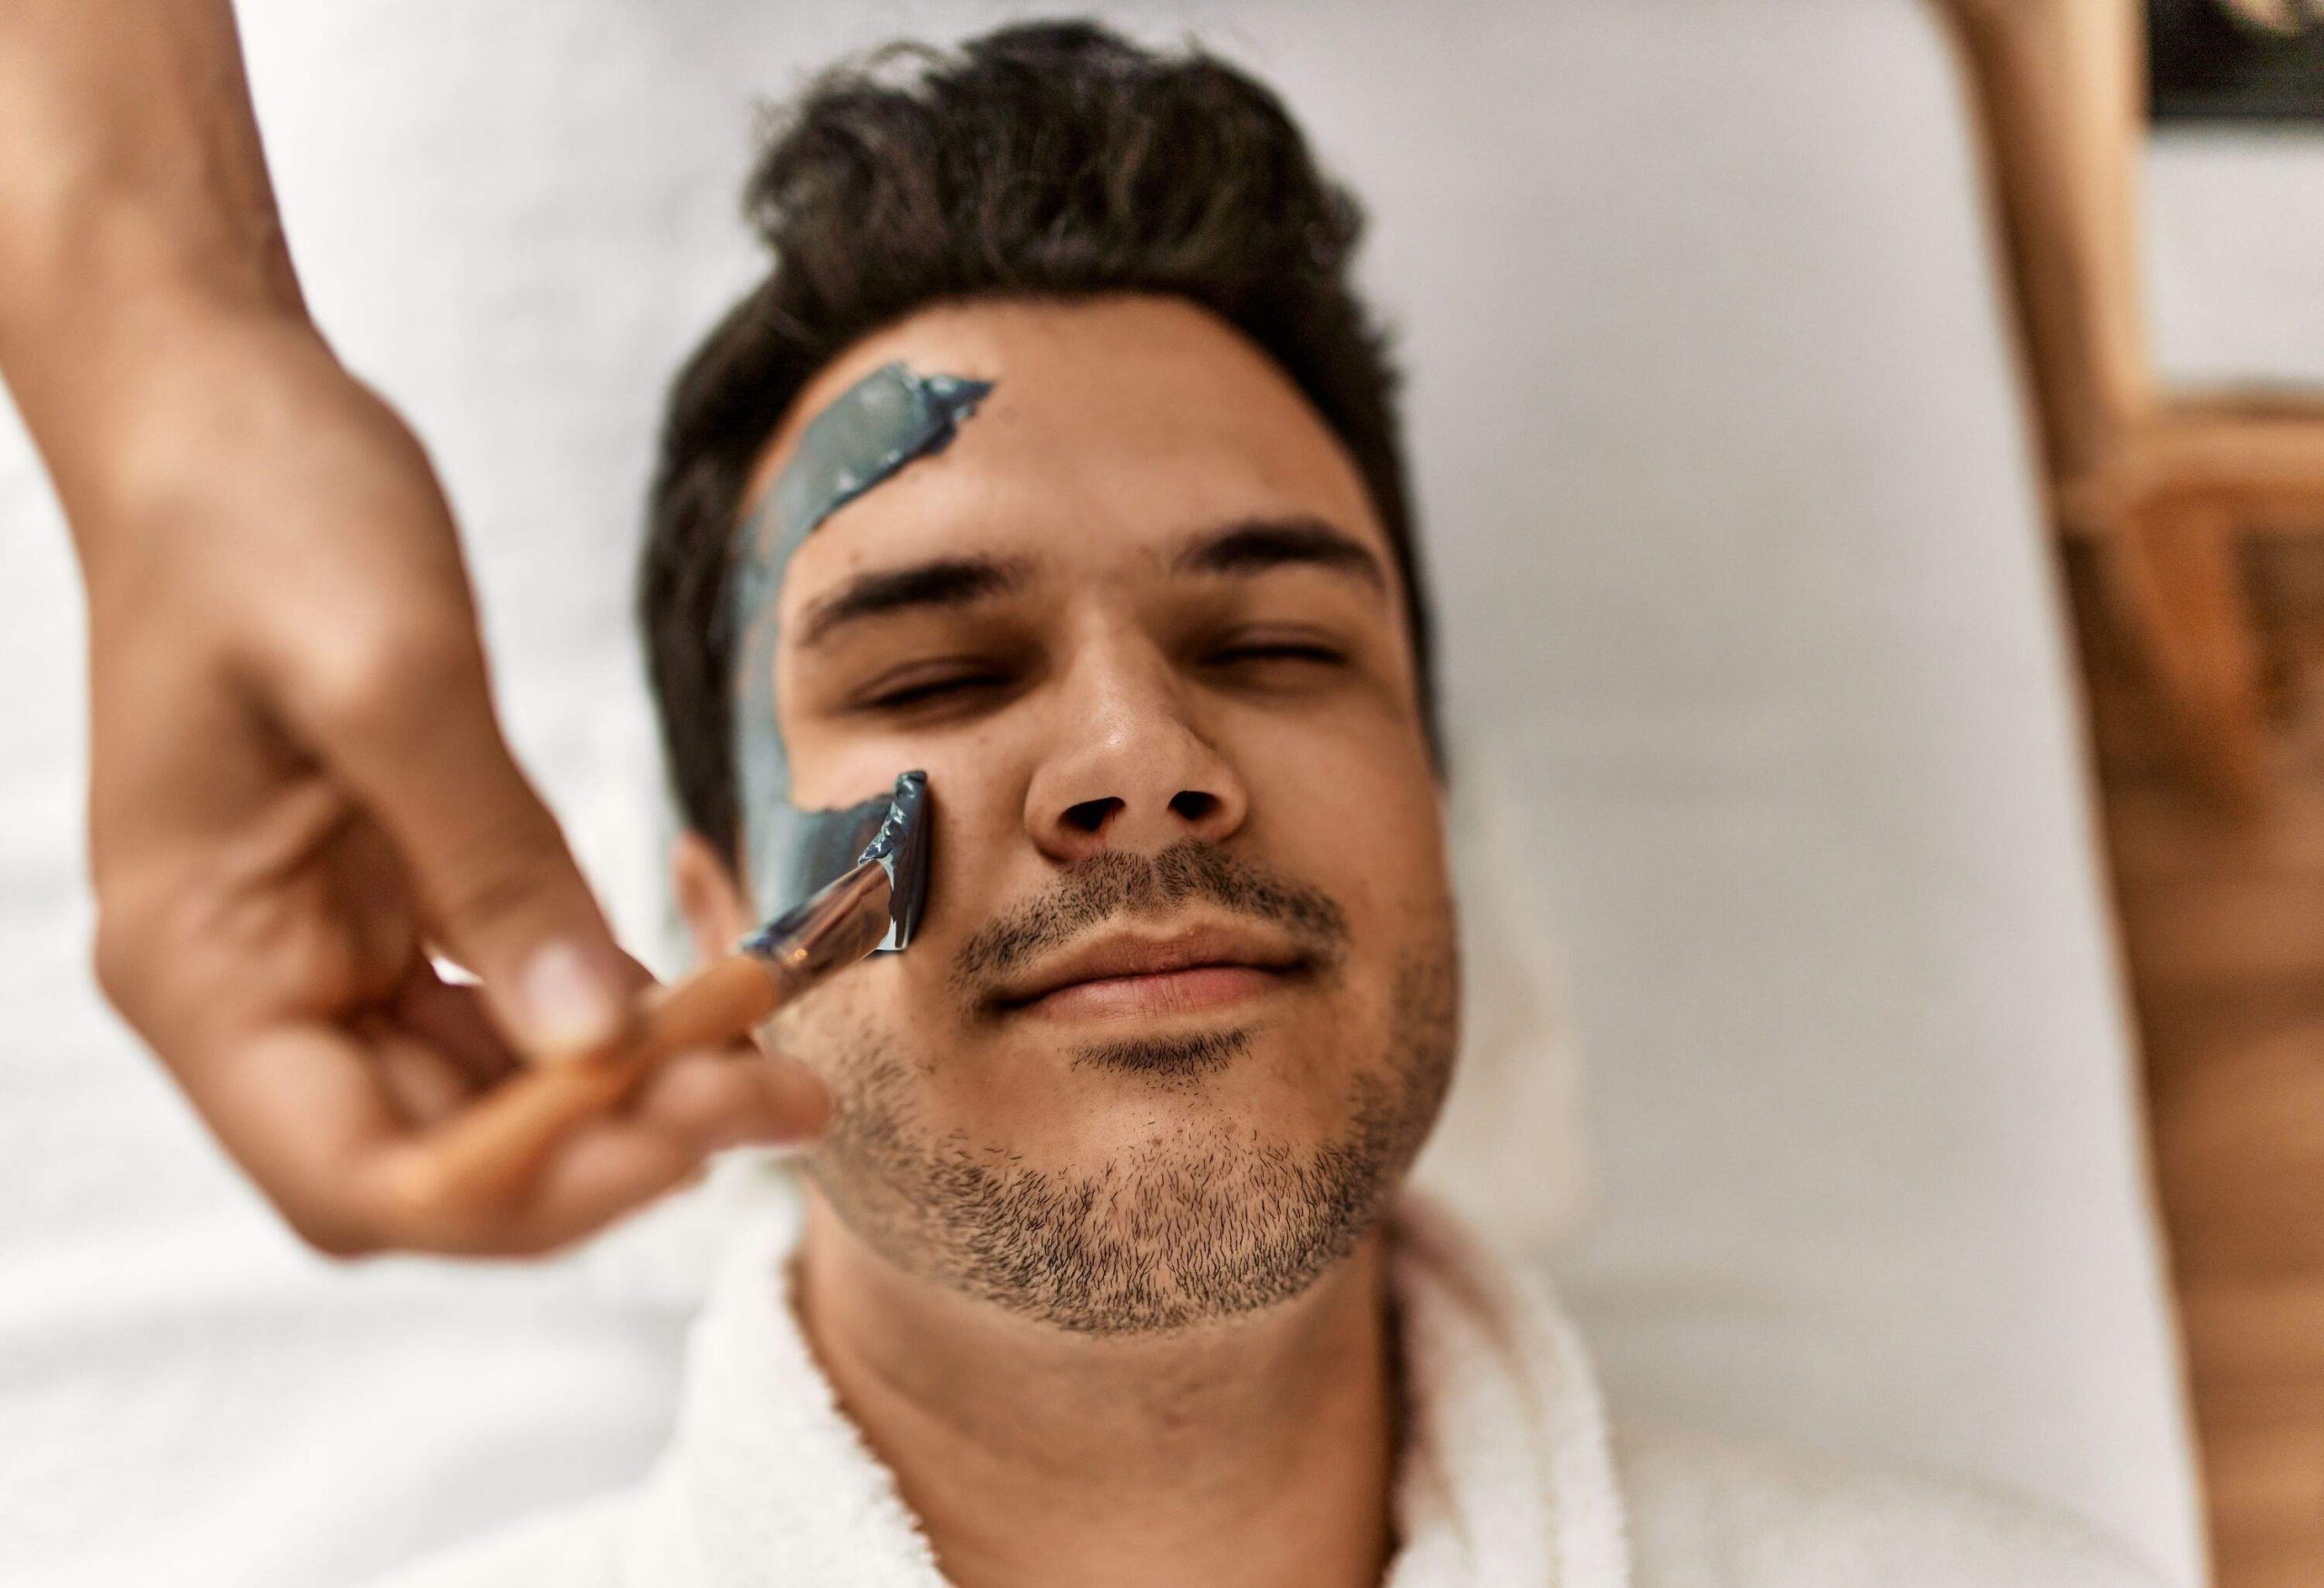 Man reciving facial treatment at beauty center.